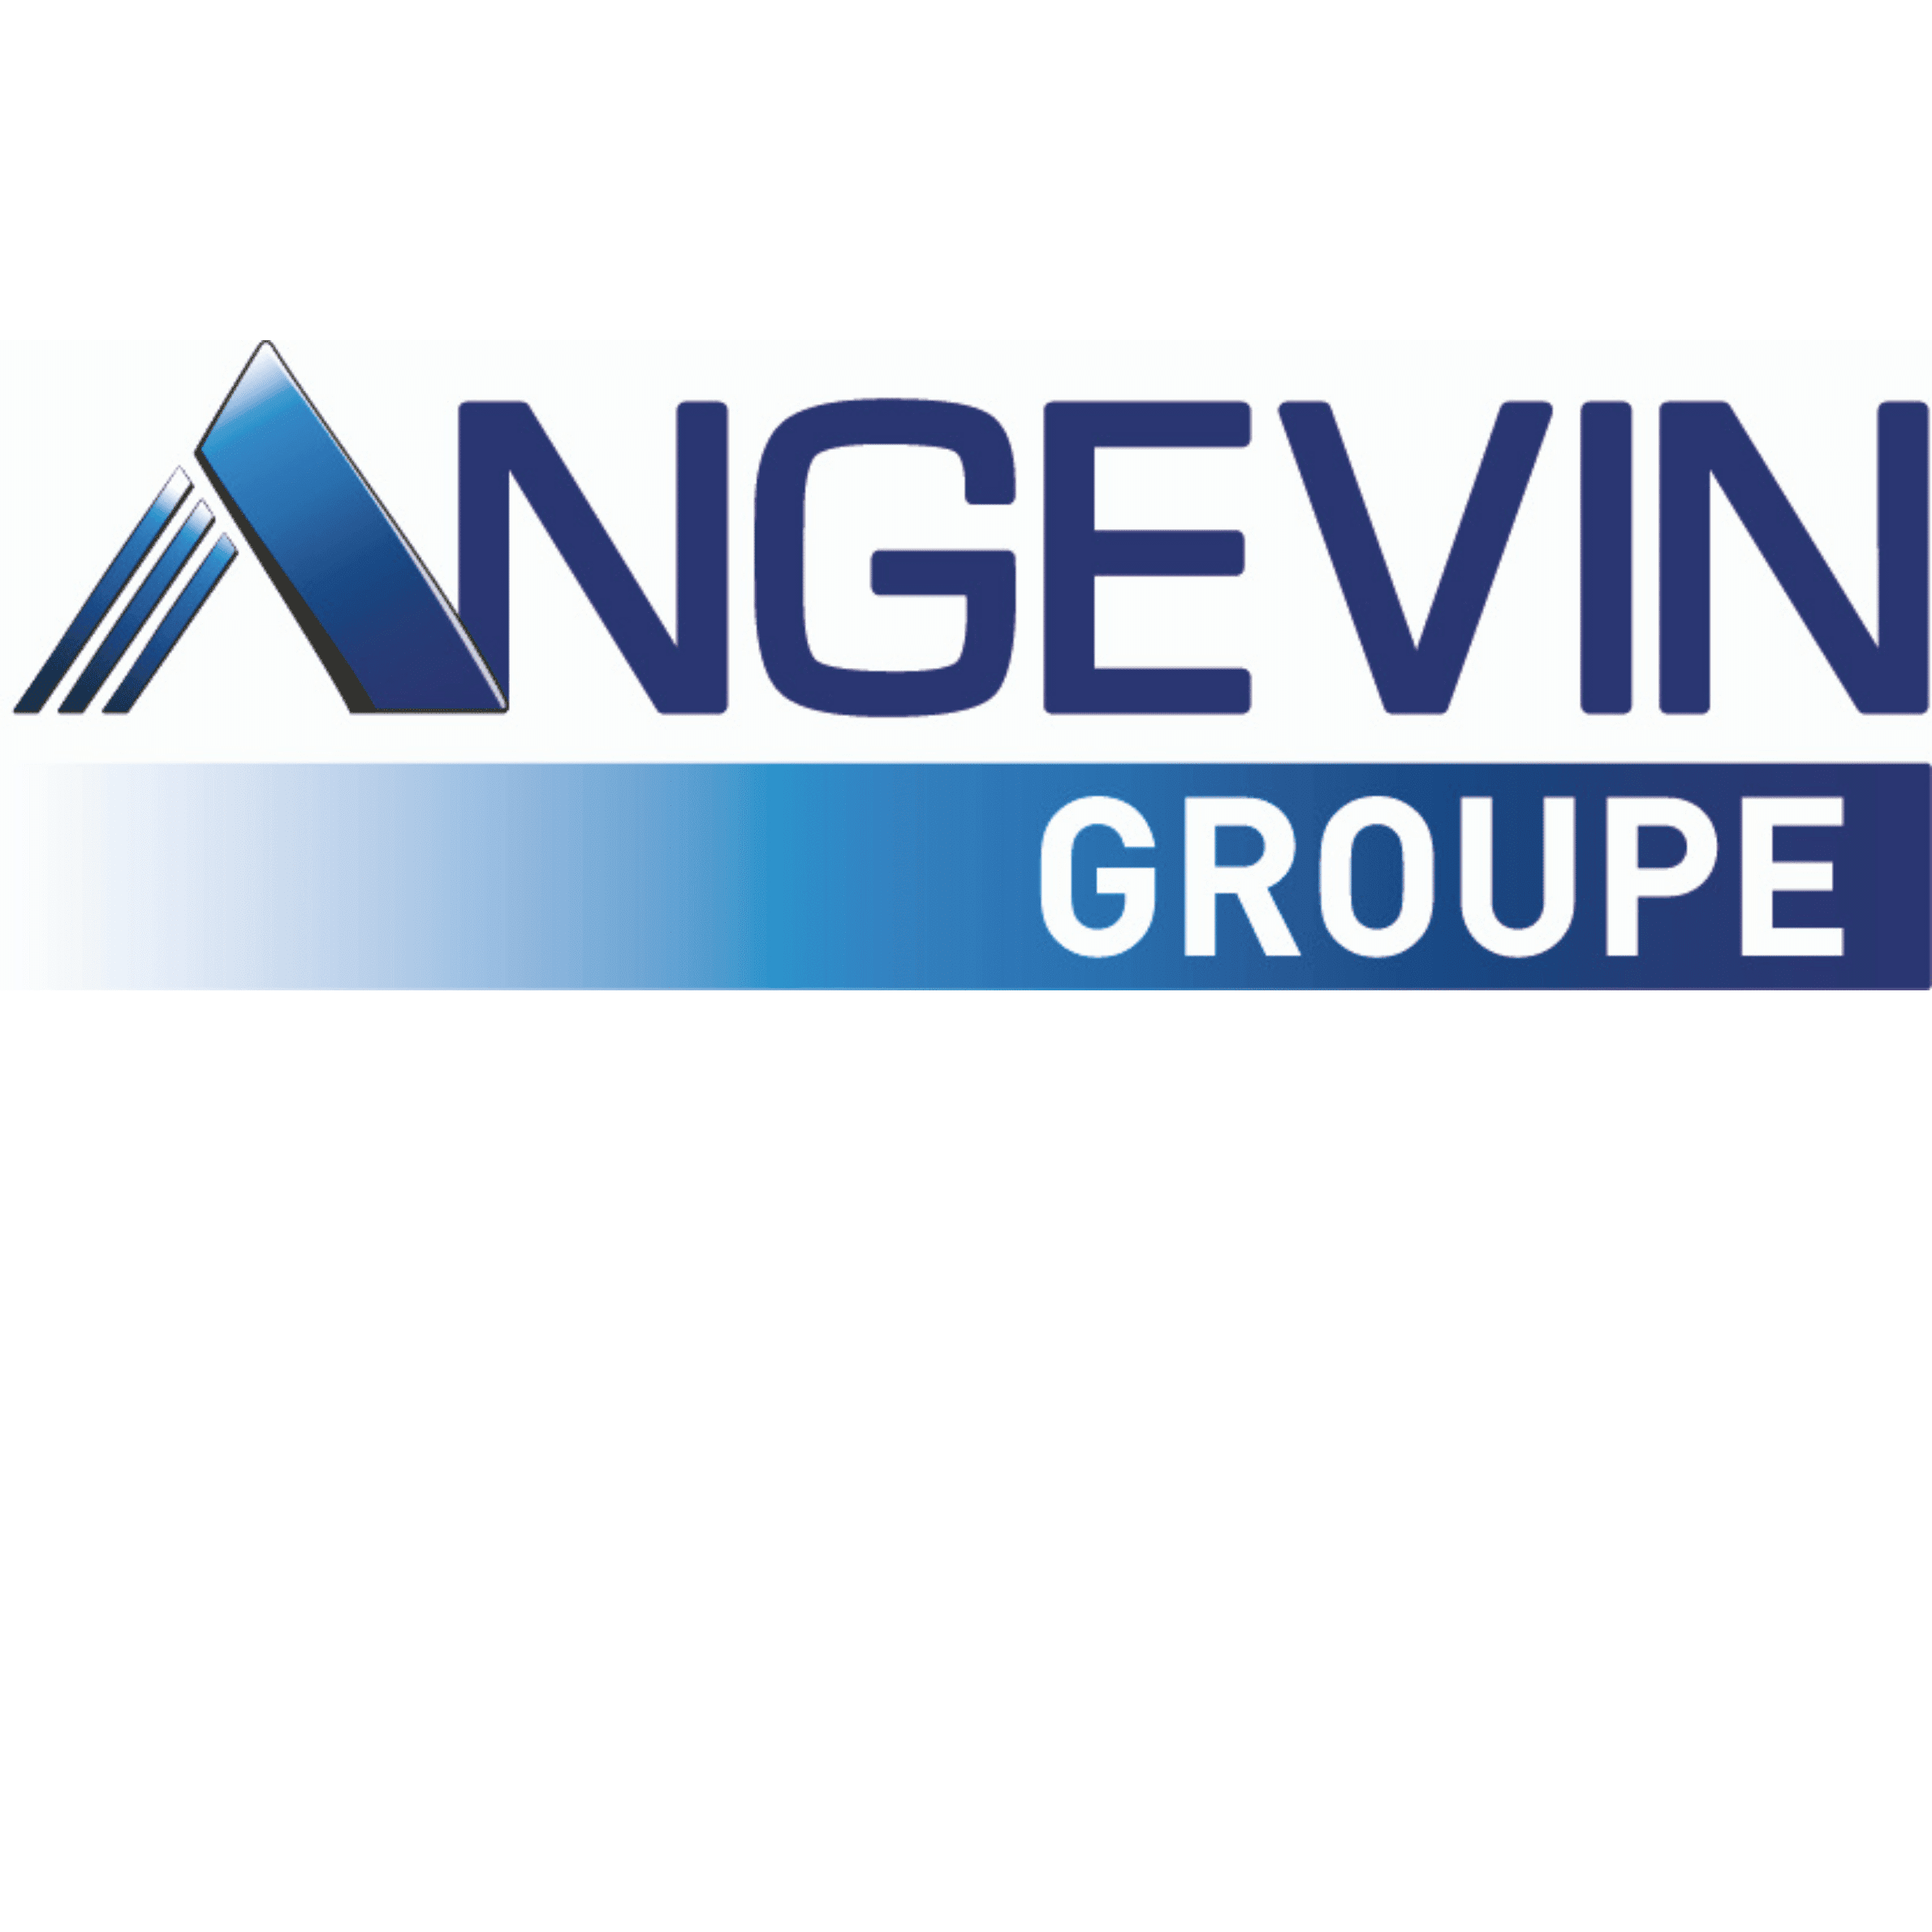 angevin Groupe